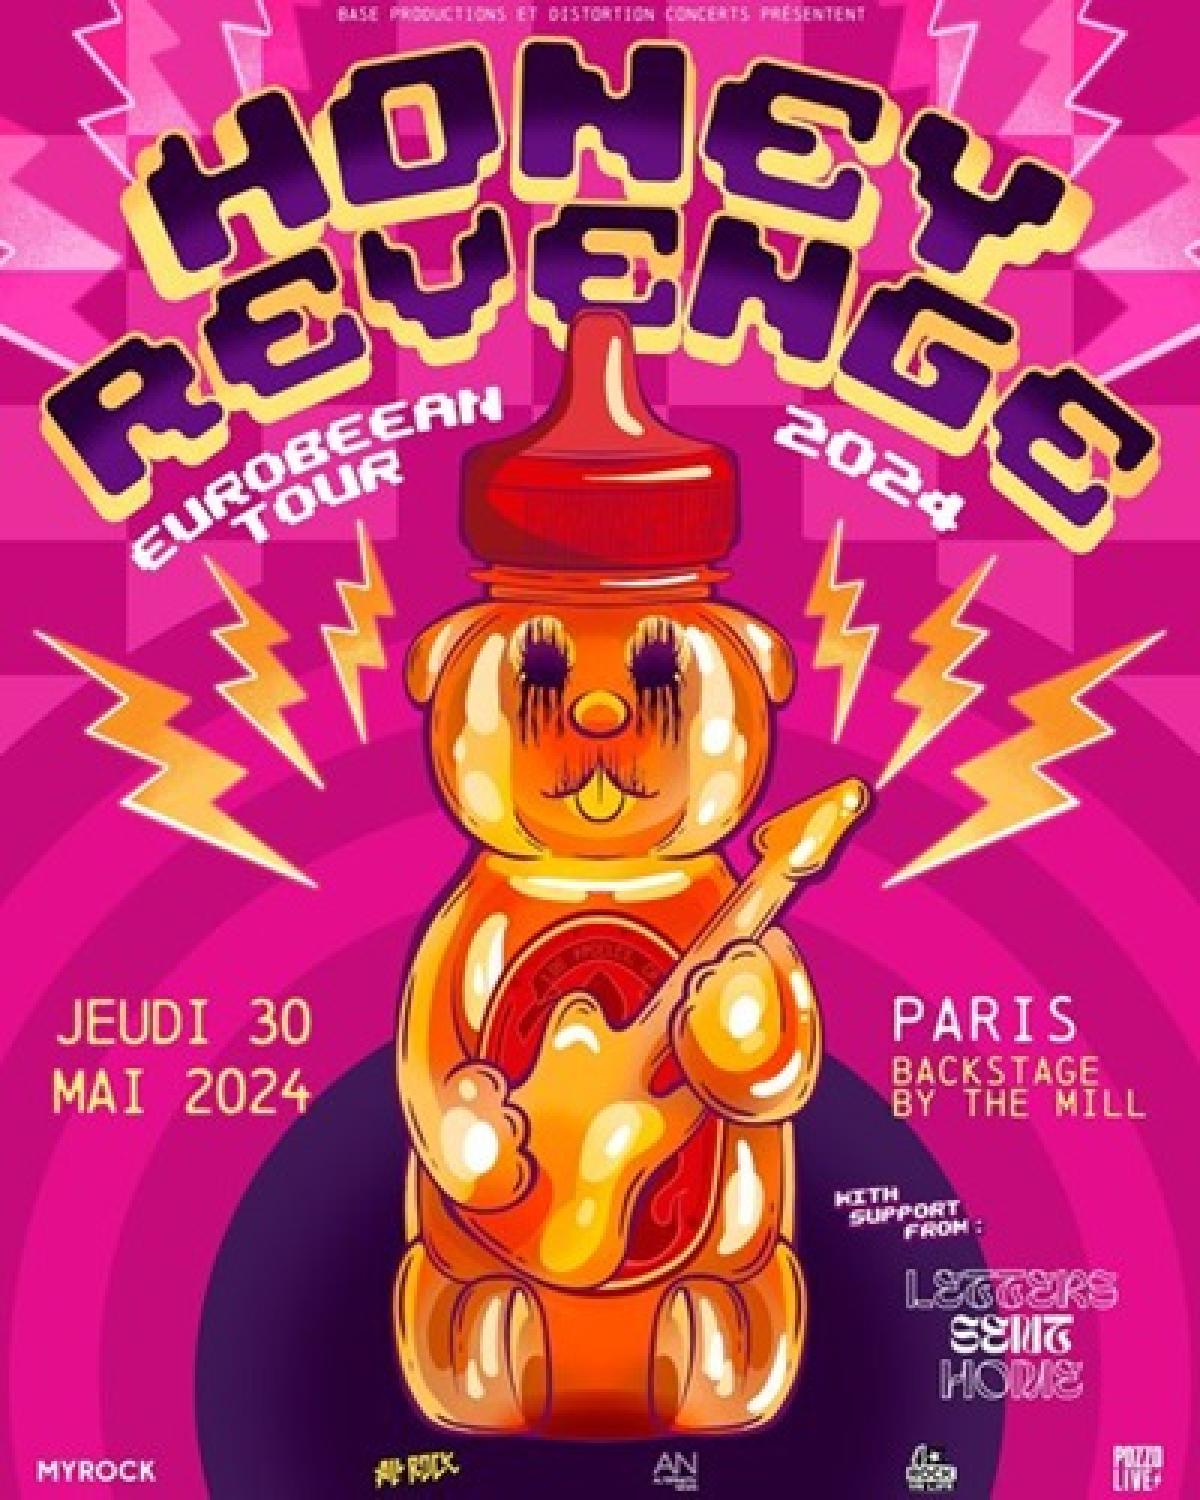 Billets Honey Revenge (O'Sullivans Backstage By The Mill - Paris)